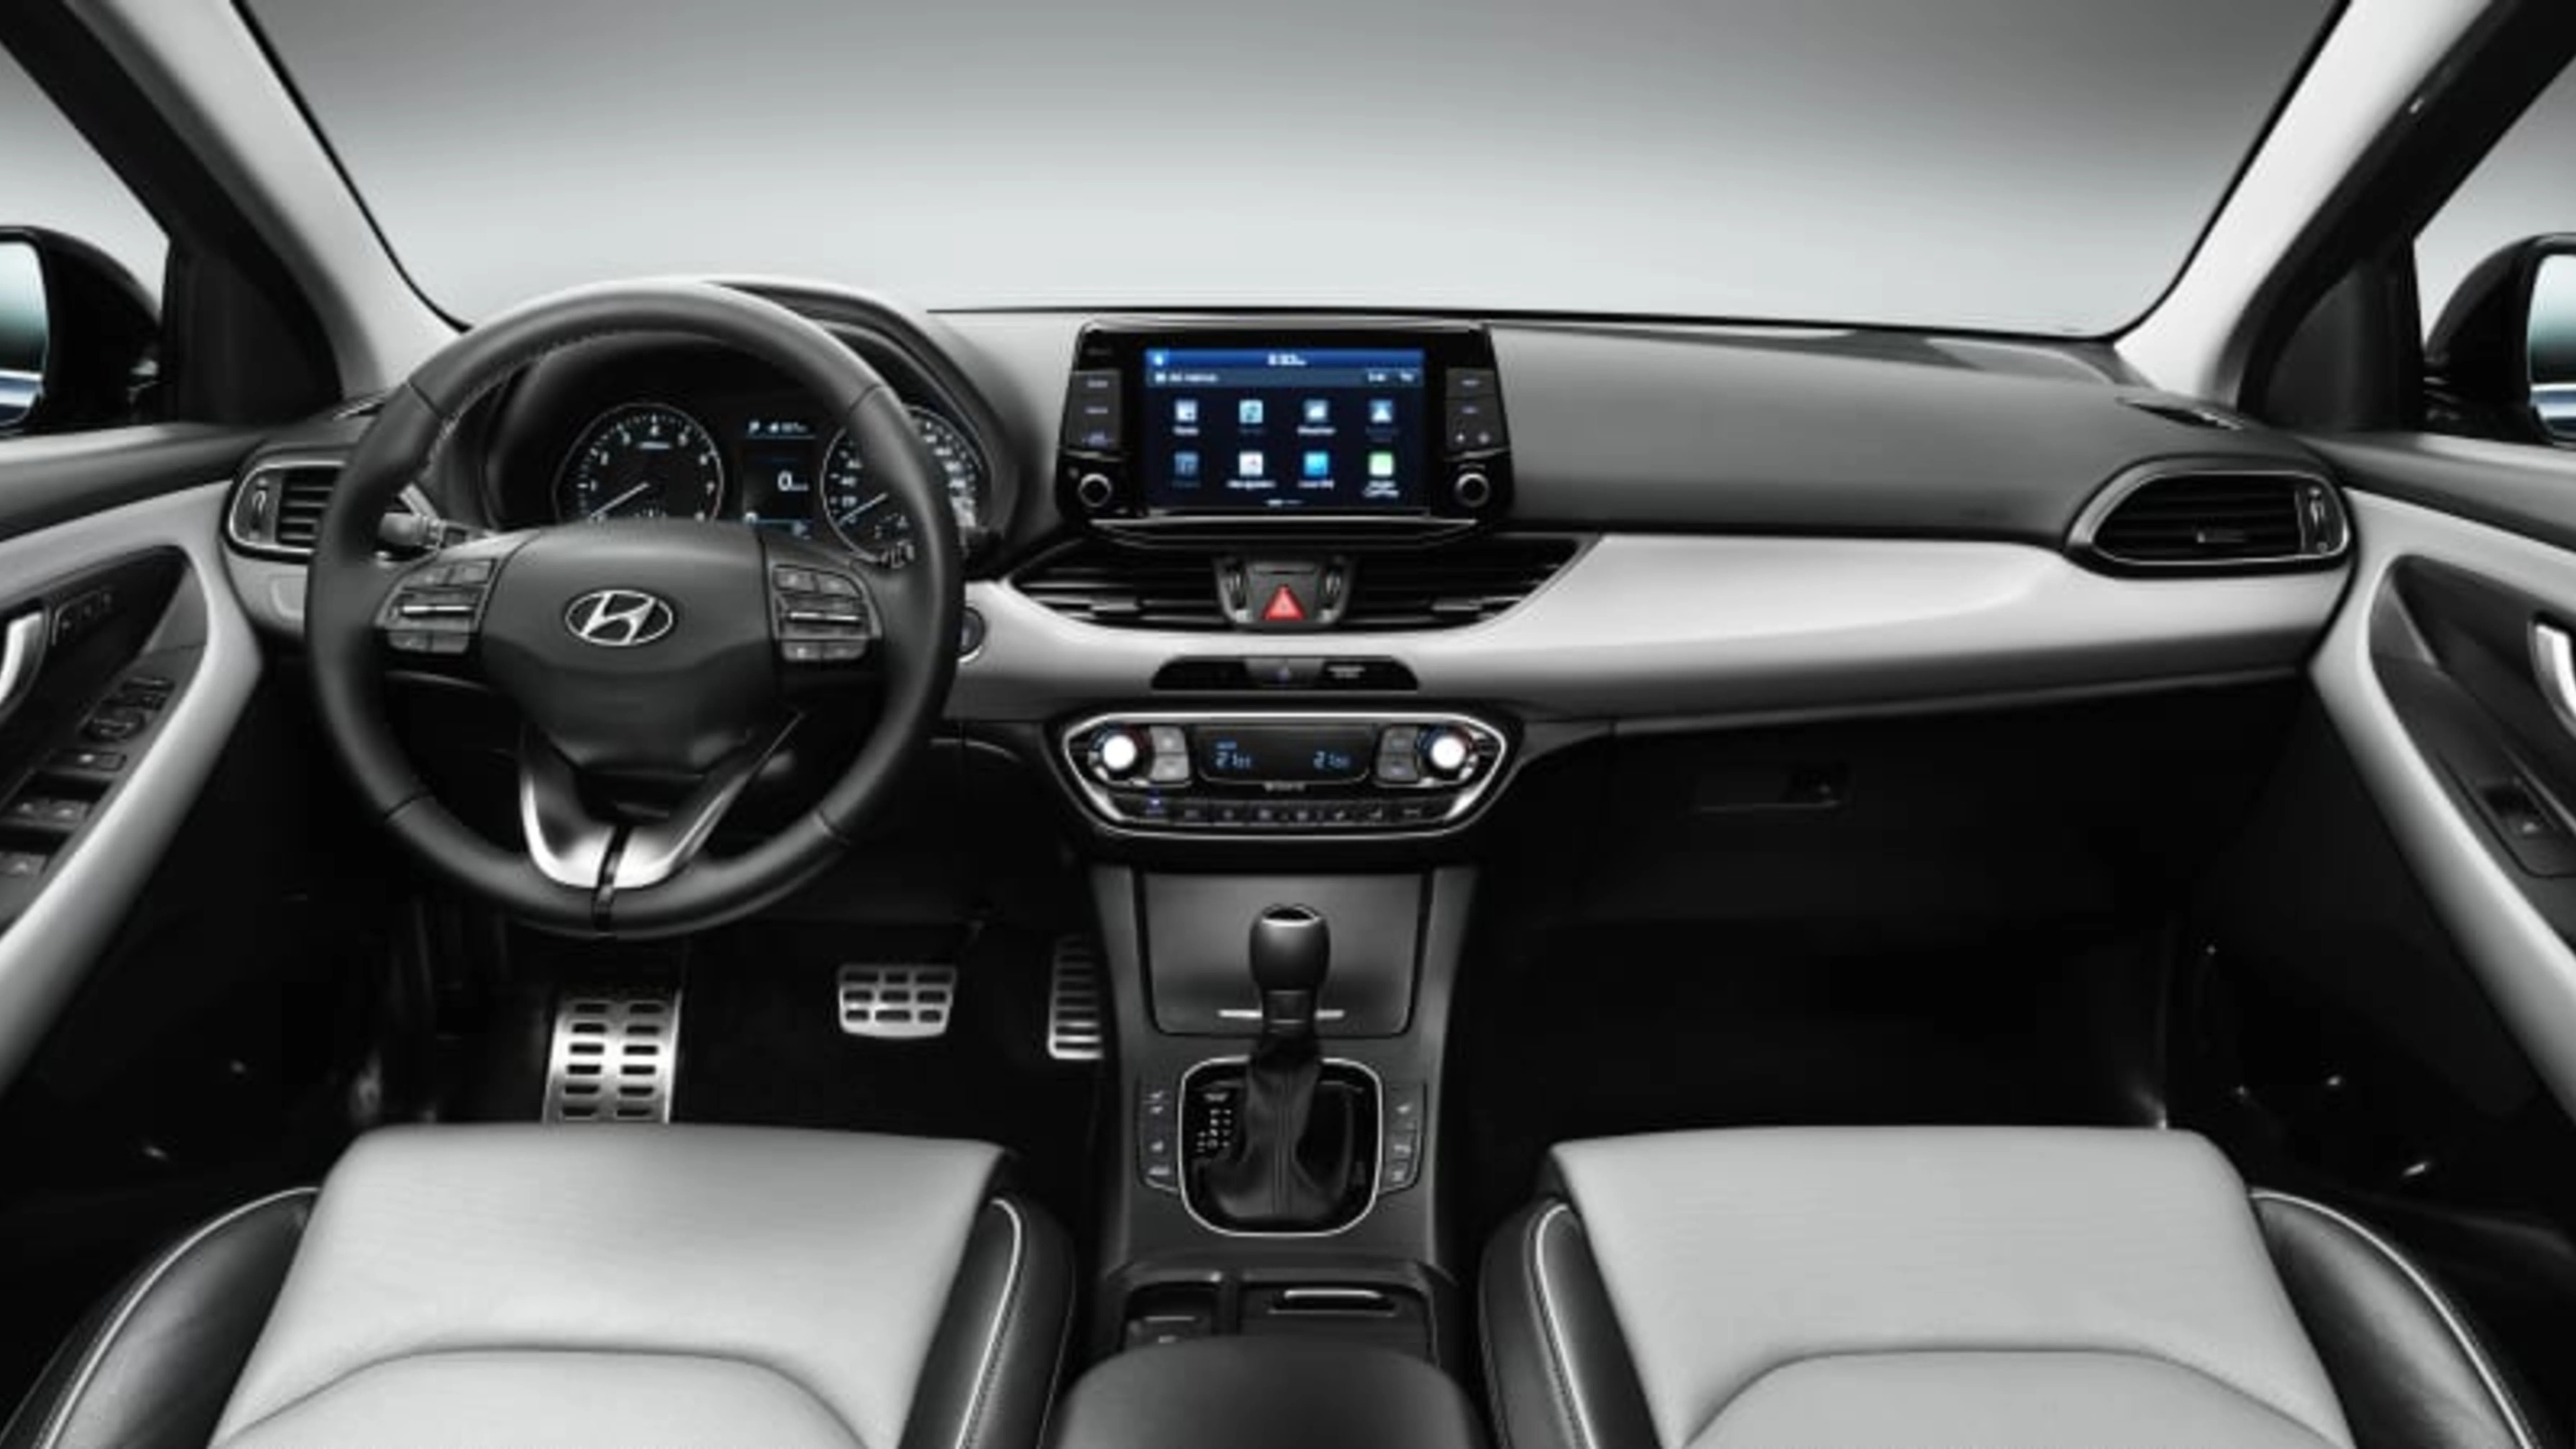 2017 Hyundai i30 interior